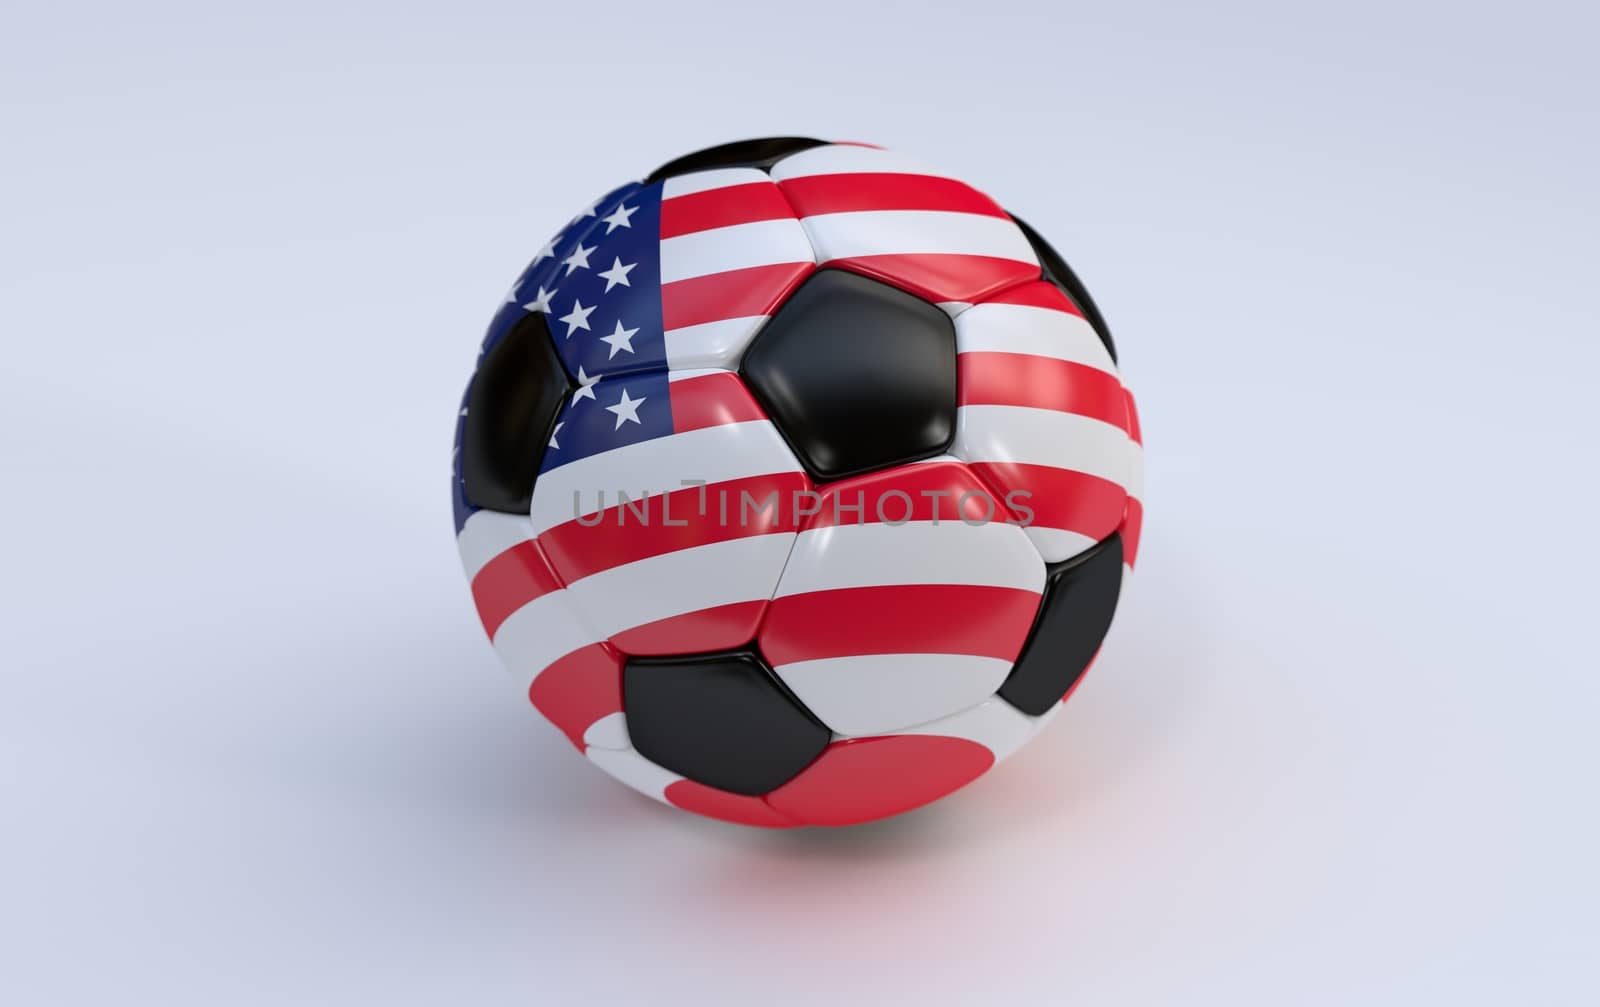 Soccer ball with USA flag by Barbraford